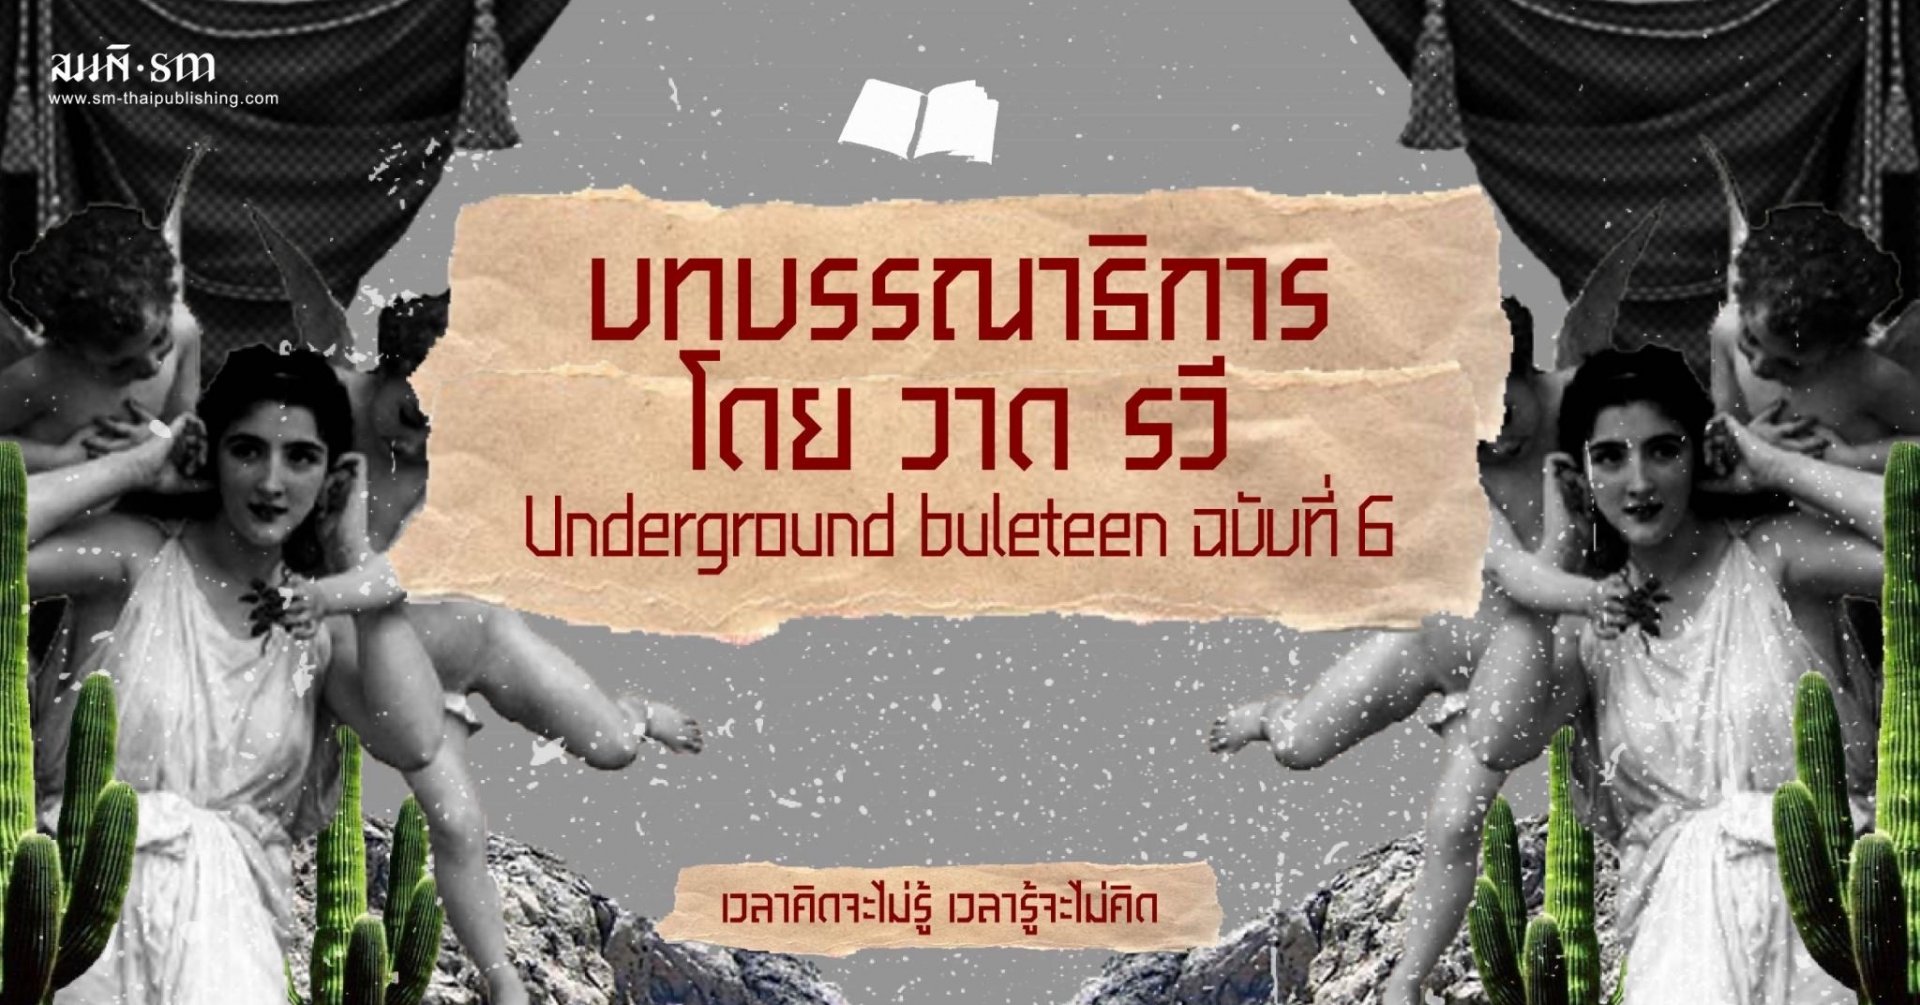 Underground buleteen ฉบับที่ 6 : บทบรรณาธิการโดย วาด รวี 